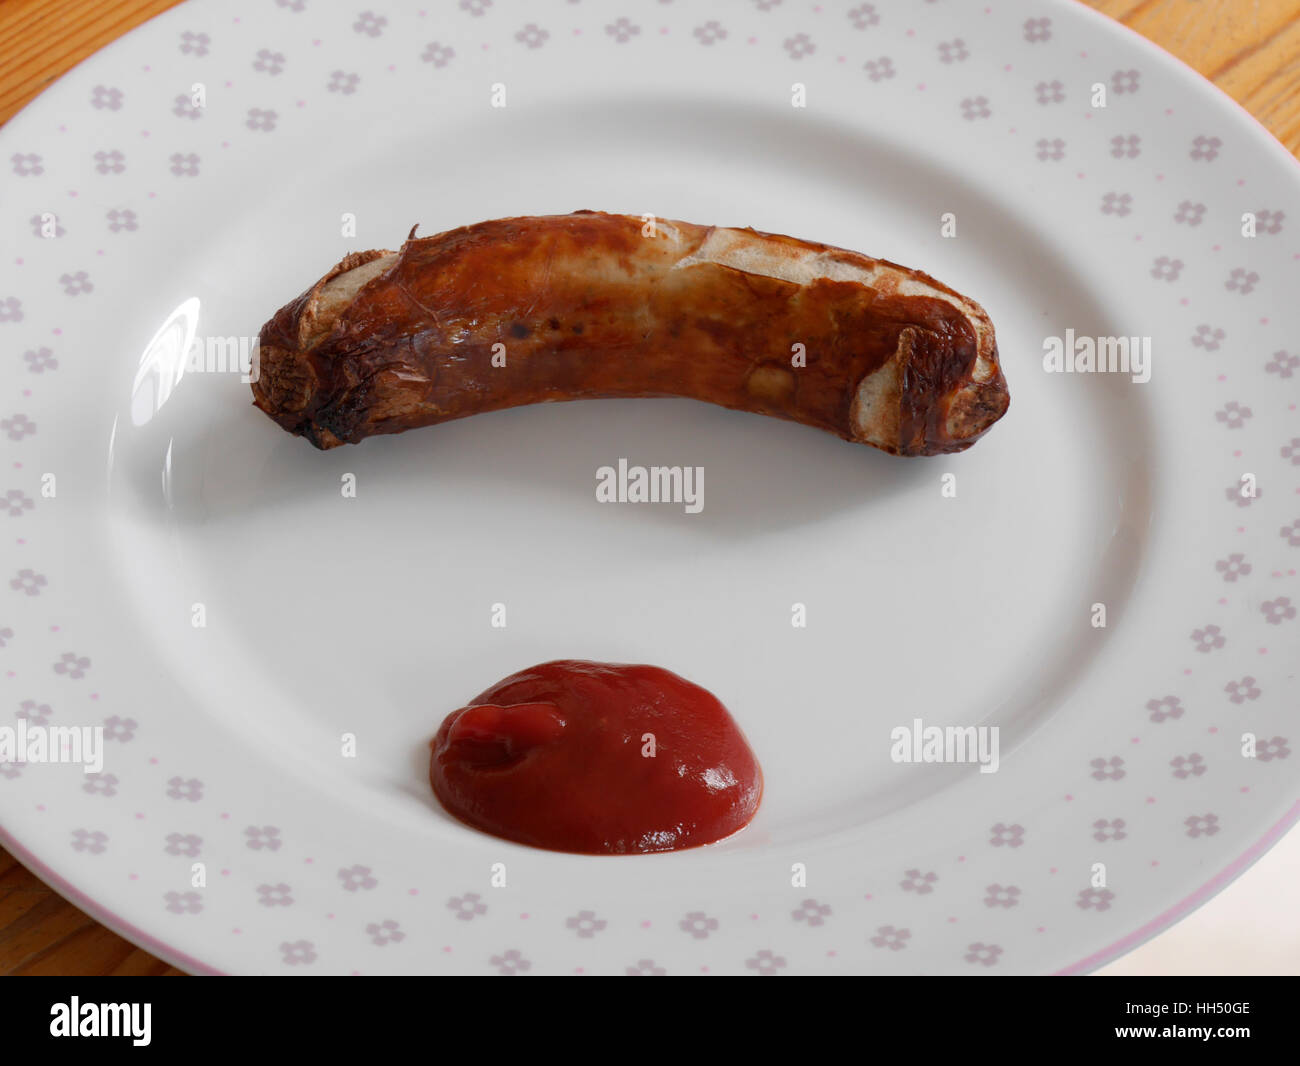 Sausage bratwurst Stock Photo